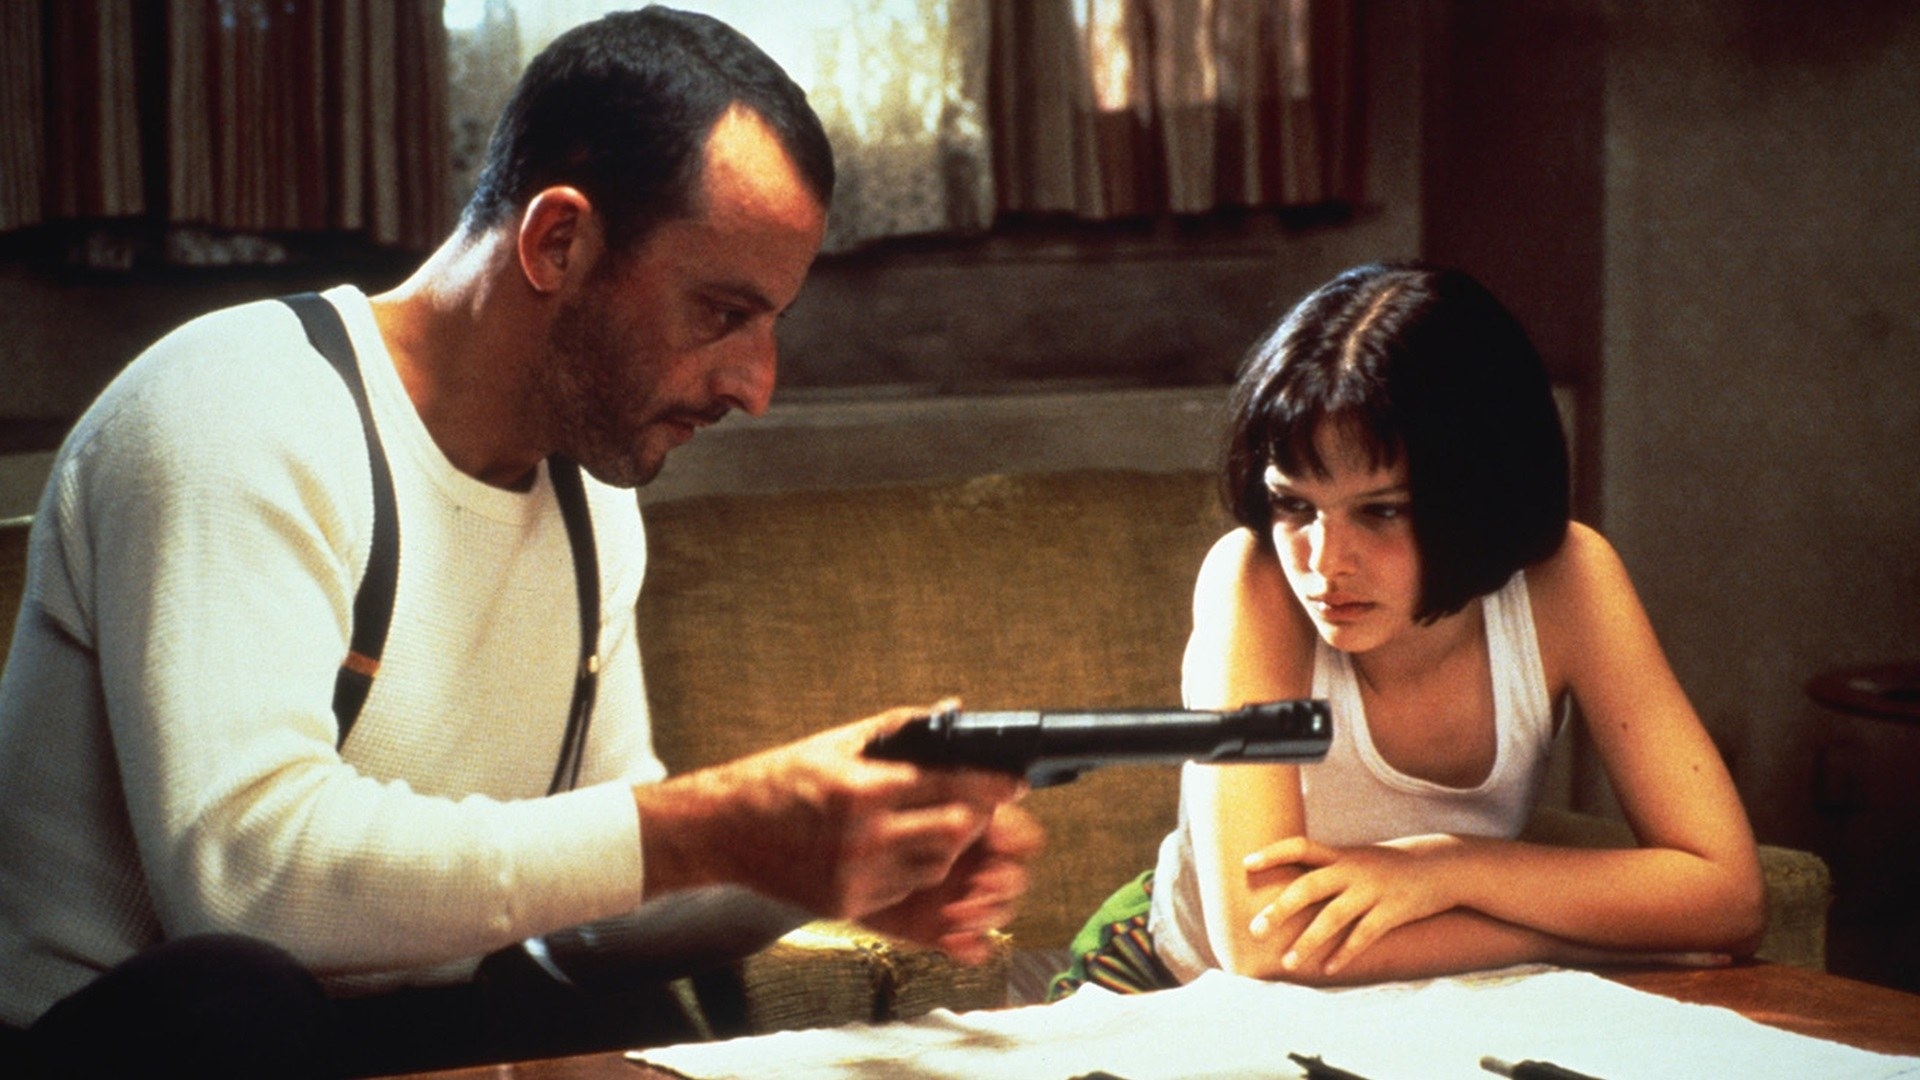 Jean Reno shows a gun to Natalie